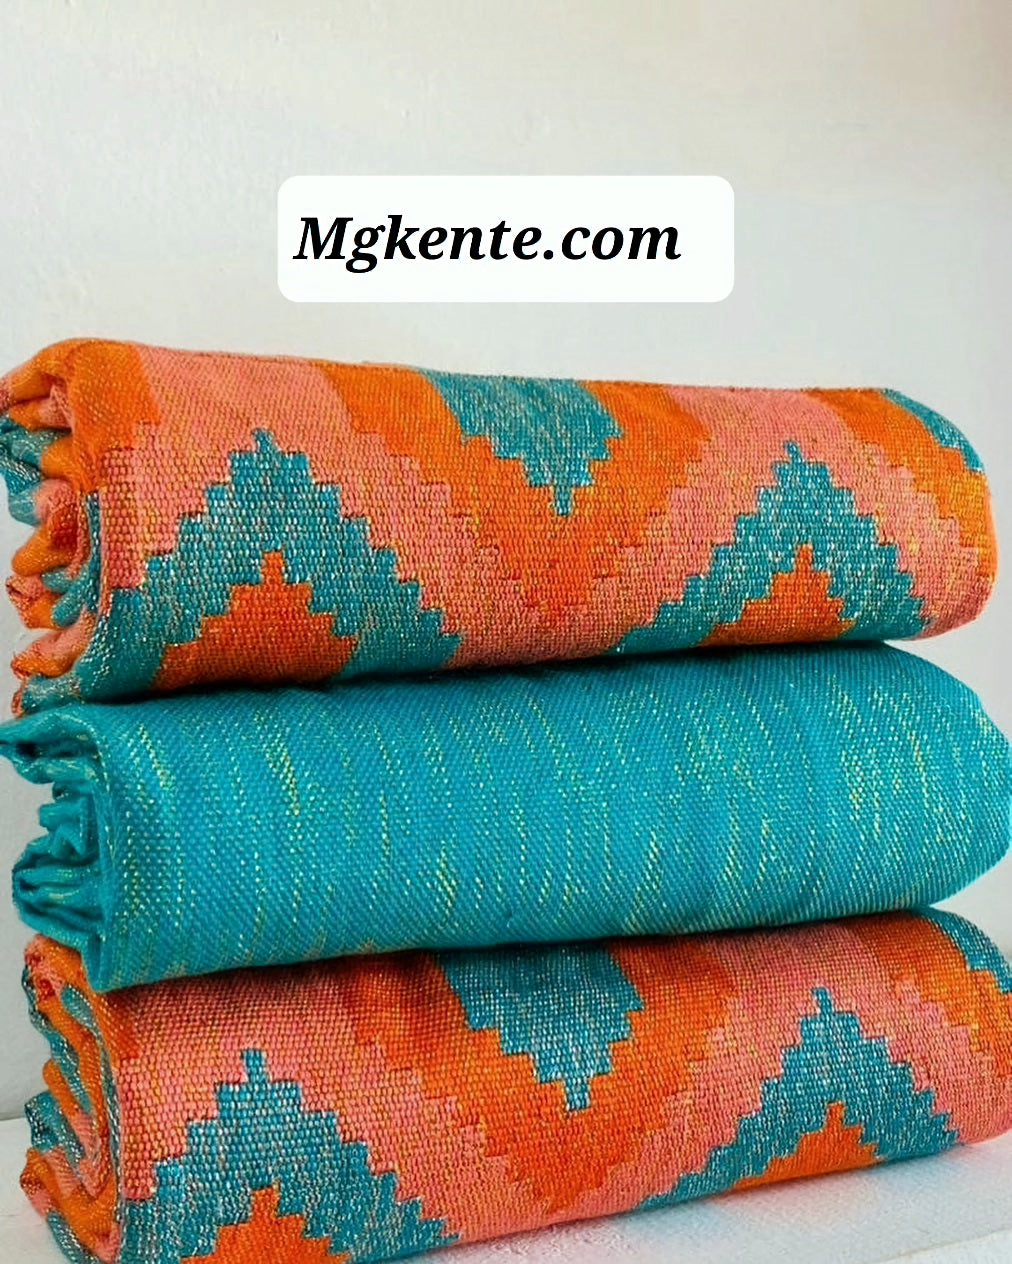 MG Premium Hand Weaved Kente Cloth P279